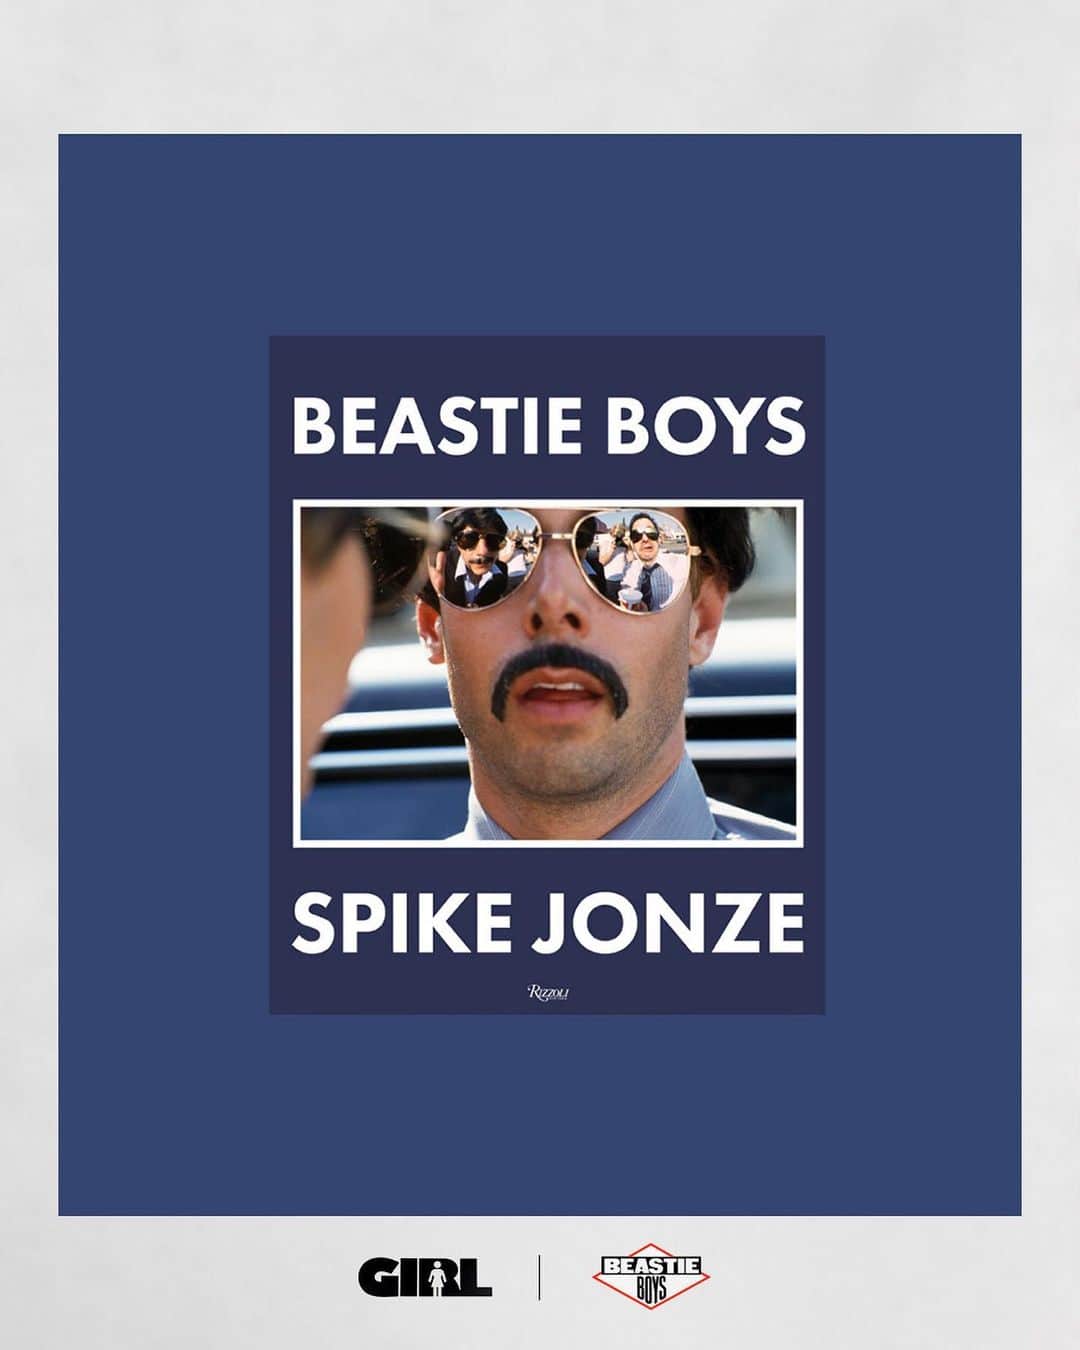 JOURNAL STANDARDさんのインスタグラム写真 - (JOURNAL STANDARDInstagram)「【 Beastie Boys × GirlSkateboards】﻿ ﻿ カリフォルニア発のスケートカンパニー『Girl Skateboards』が、『Beastie Boys』とのコラボレーションによるコレクションをリリース！﻿ ﻿ 今回のコラボレーションでは、全てのプロダクトが同カンパニーの創始者の一人である SPIKE JONZE が過去に撮影した Beastie Boys の写真で彩られている。﻿ ﻿ コレクションはTシャツ等といったストリートマナーに忠実なアイテム群に、MV『Sabotage』のスチールフォトや、アルバム『Check Your Head』,『The Sounds of Science』のジャケットの別カットなどをフィーチャー。﻿ ﻿ ファンならば全種類コンプリートしたいコレクションに仕上がっております。 ﻿ ﻿ ※JOURNAL STANDARD では、スケートデッキの販売はございません。﻿ ﻿ ■【GIRL SKATEBOADS/ガールスケートボード】× BEASTIE BOYS S.JONES ﻿ ￥7,500+TAX  NO.20071610036610﻿ ﻿ ■【GIRL SKATEBOADS/ガールスケートボード】× BEASTIE BOYS L/S﻿ ￥9,600+TAX  NO.20070610021410﻿  ﻿ ﻿ #BeastieBoys ﻿ #BeastieBoysStory﻿ #Spike Jonze ﻿ #GirlSkateboards﻿ #SpikeJonze ﻿ #adrock #miked #MCA﻿  ﻿ 【発売日】﻿ 7月1日(水)﻿ ※ベイクルーズストアでは先行予約を承っております。﻿ ﻿ 【展開店舗】﻿ 表参道店、広島店、京都店、新宿Flags店、横浜店、福岡店、仙台店、札幌店、難波店、大宮店、町田店、名古屋タカシマヤゲートタワーモール店、ベイクルーズストア﻿ ※アイテムに関するお問い合わせは、上記展開店舗までお尋ねください。 ﻿ ﻿ ﻿ --------------------------------------﻿ ﻿ ﻿ - INFORMATION -﻿ ﻿ ■ 6/26(金)〜SUMMER SALEを開催致します。﻿ JOURNAL STANDARD各店舗、公式通販サイトで春夏商品をお買い得にお求め頂けるチャンス。﻿  ﻿ --------------------------------------﻿ ﻿ @baycrews﻿ ﻿ #ジャーナルスタンダード﻿ #ベイクルーズ﻿ #journalstandard﻿ #baycrews﻿ #fashion﻿ #20ss﻿ #mens」6月30日 18時23分 - journalstandard.jp